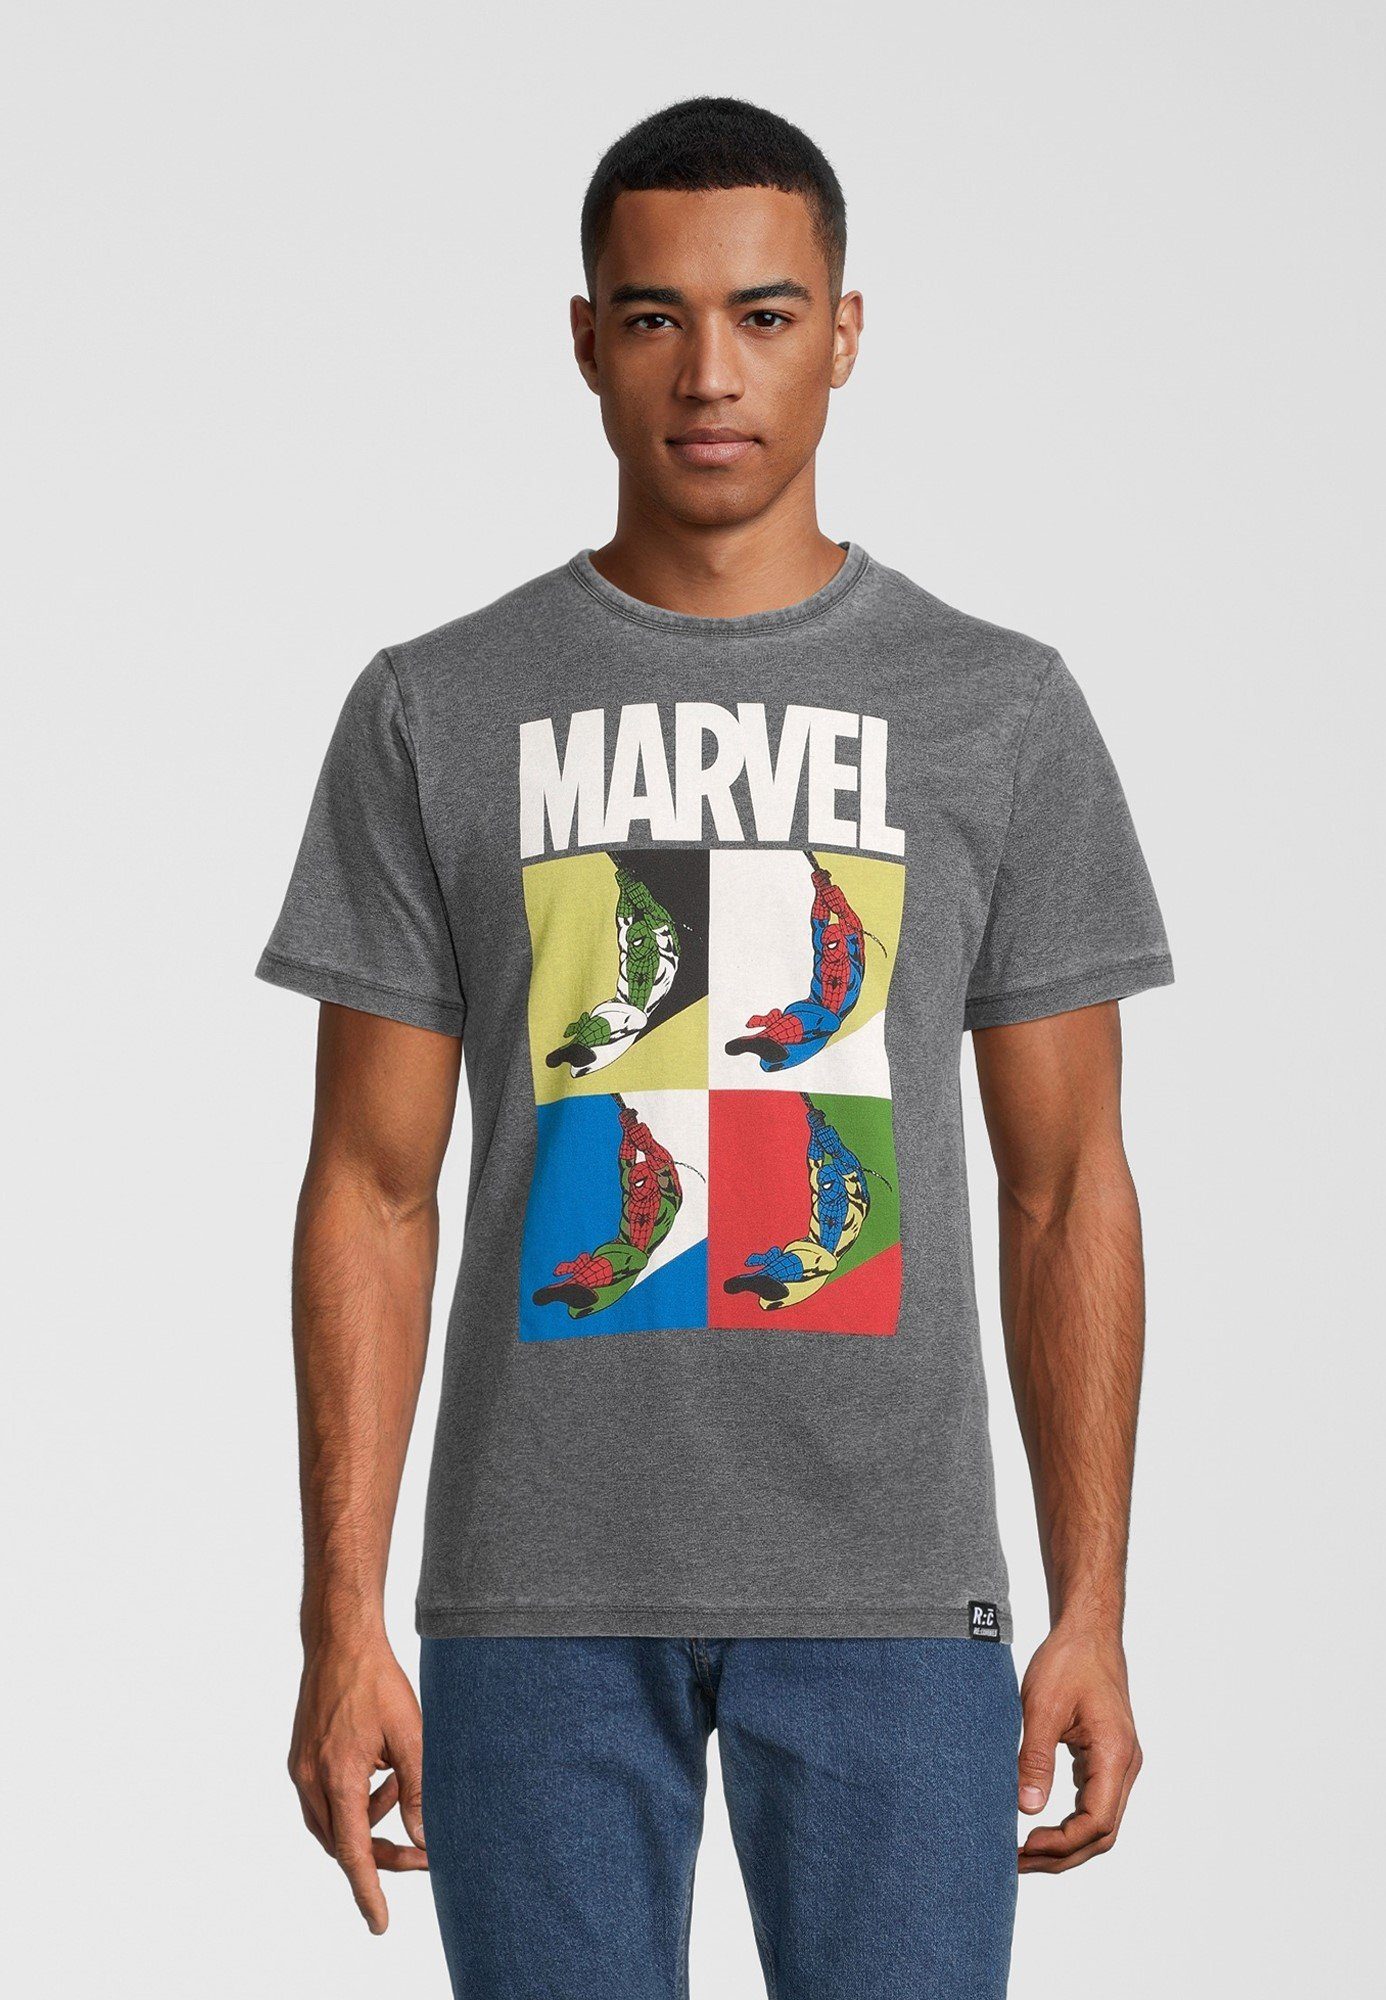 GOTS zertifizierte T-Shirt Bio-Baumwolle Art Marvel Recovered Charcoal Pop Spider-Man